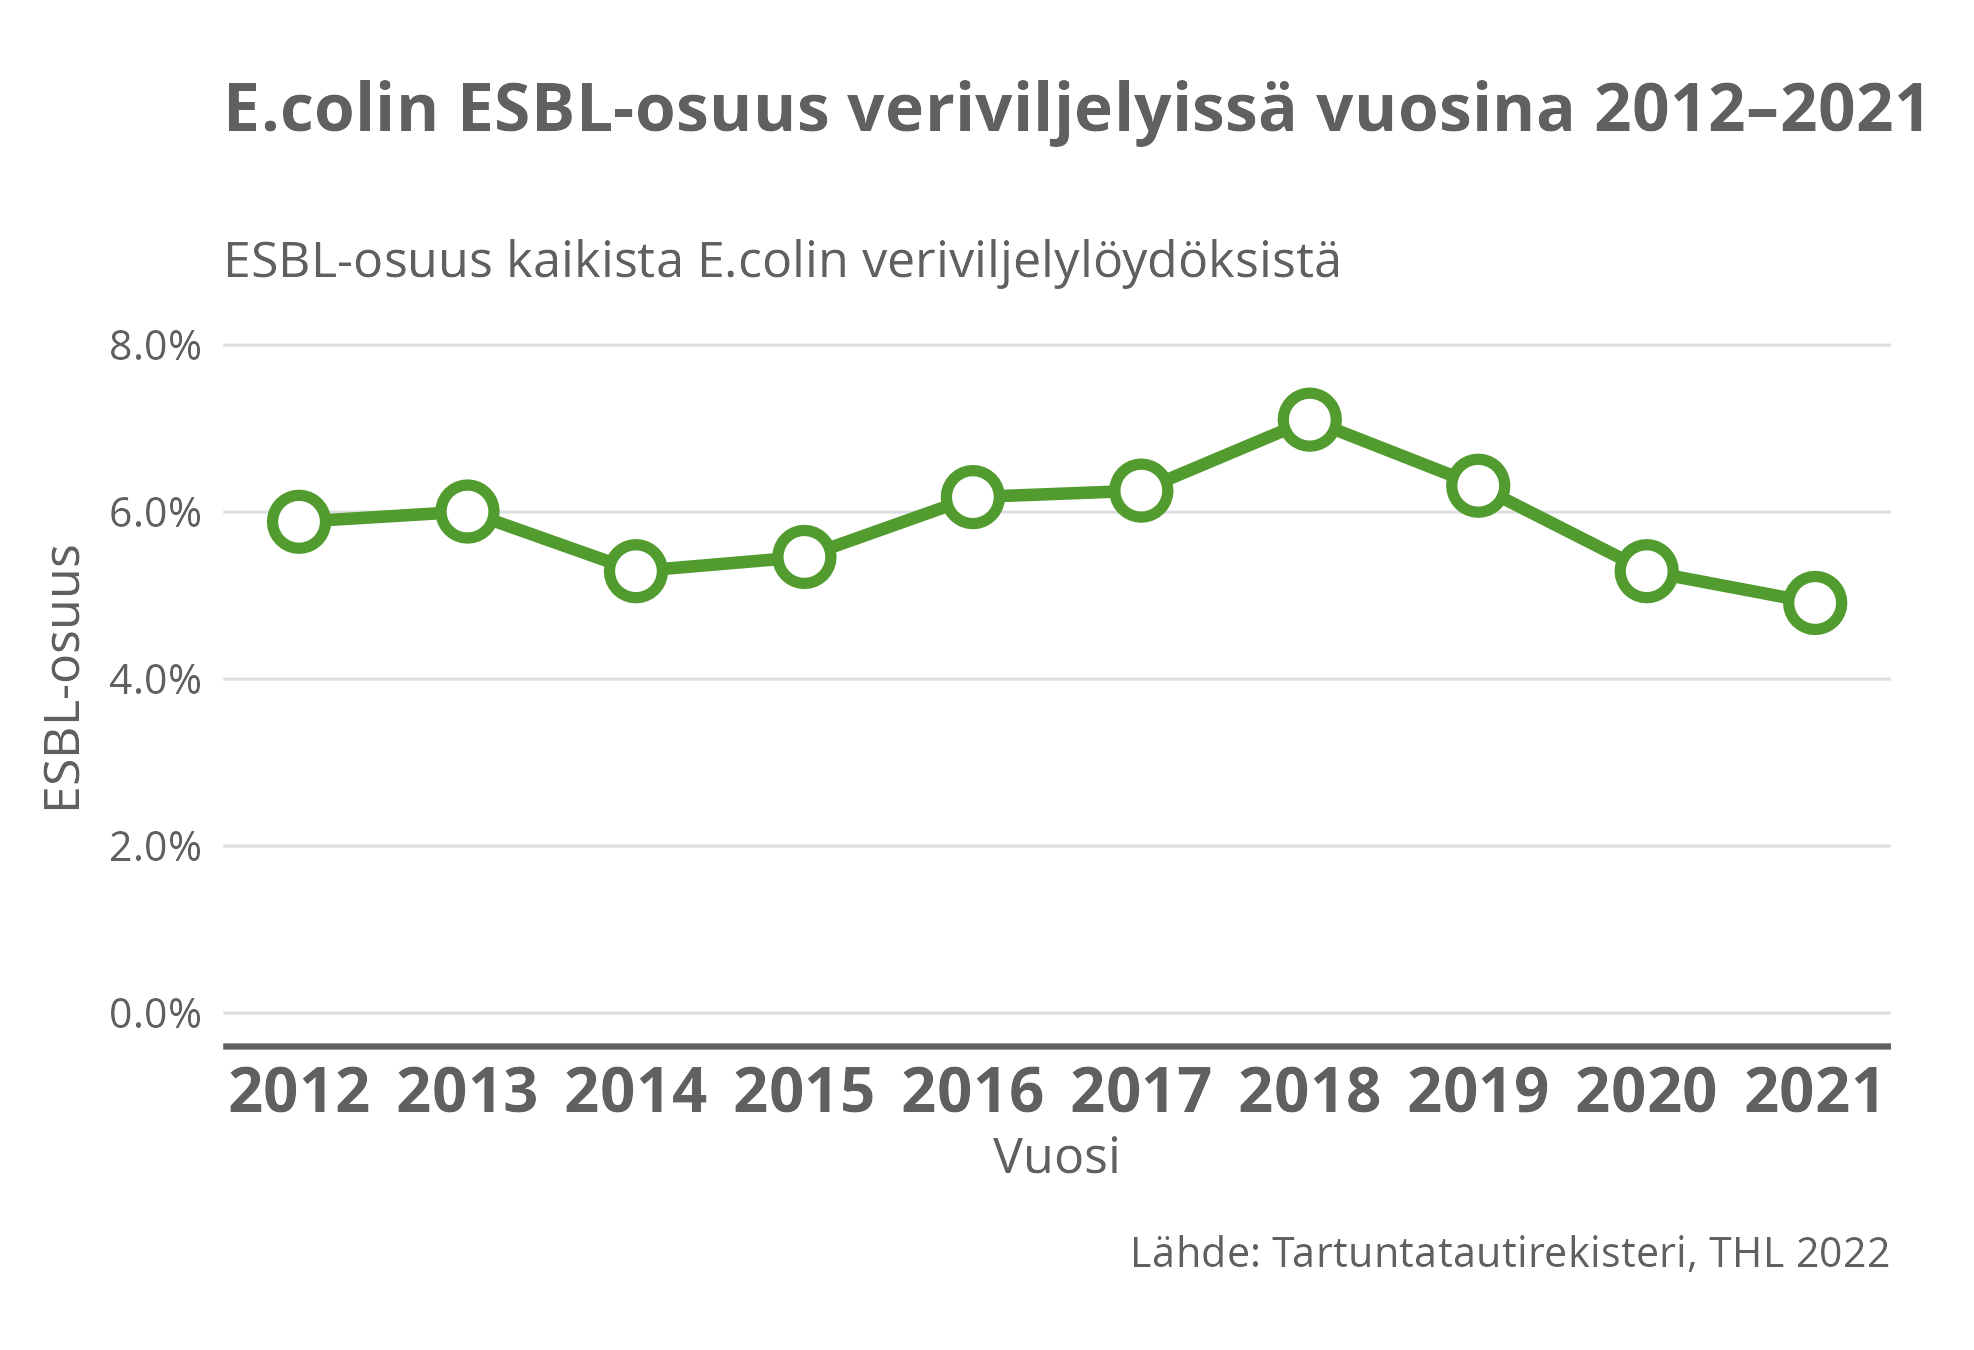 E.colin ESBL-osuus veriviljelyssä vuosina 2012-2021.